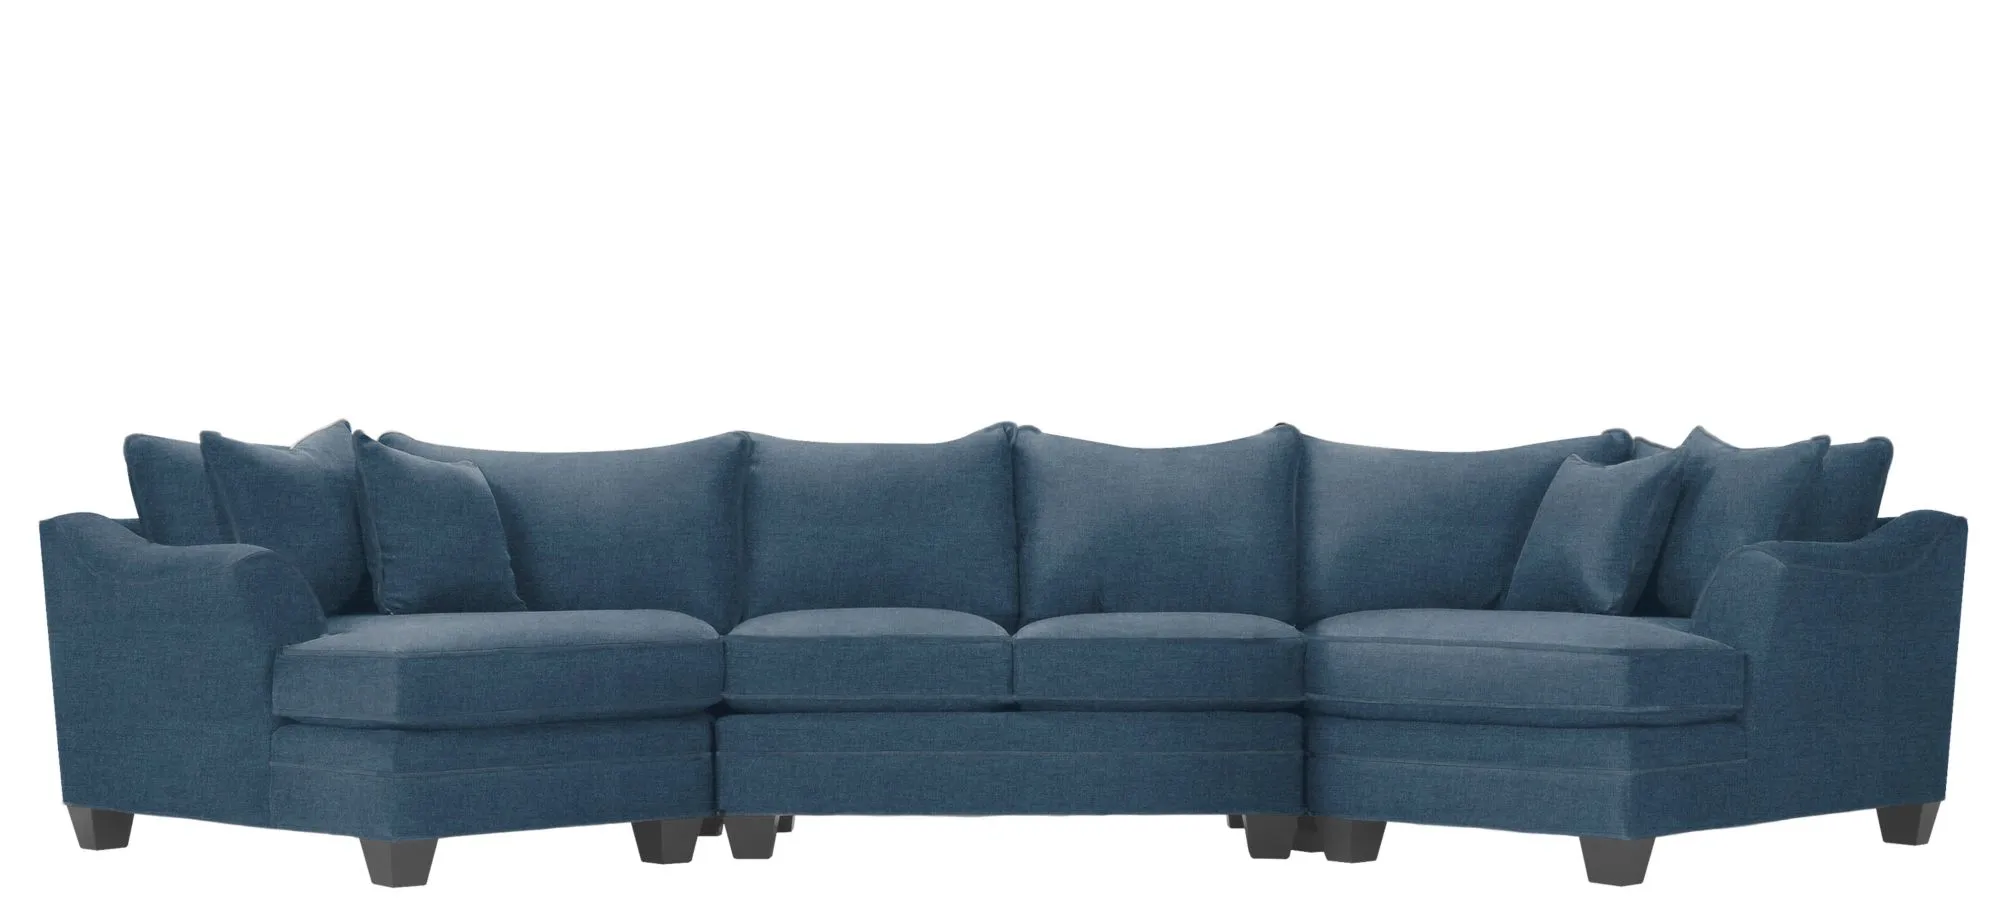 Foresthill 3-pc. Symmetrical Cuddler Sectional Sofa in Santa Rosa Denim by H.M. Richards